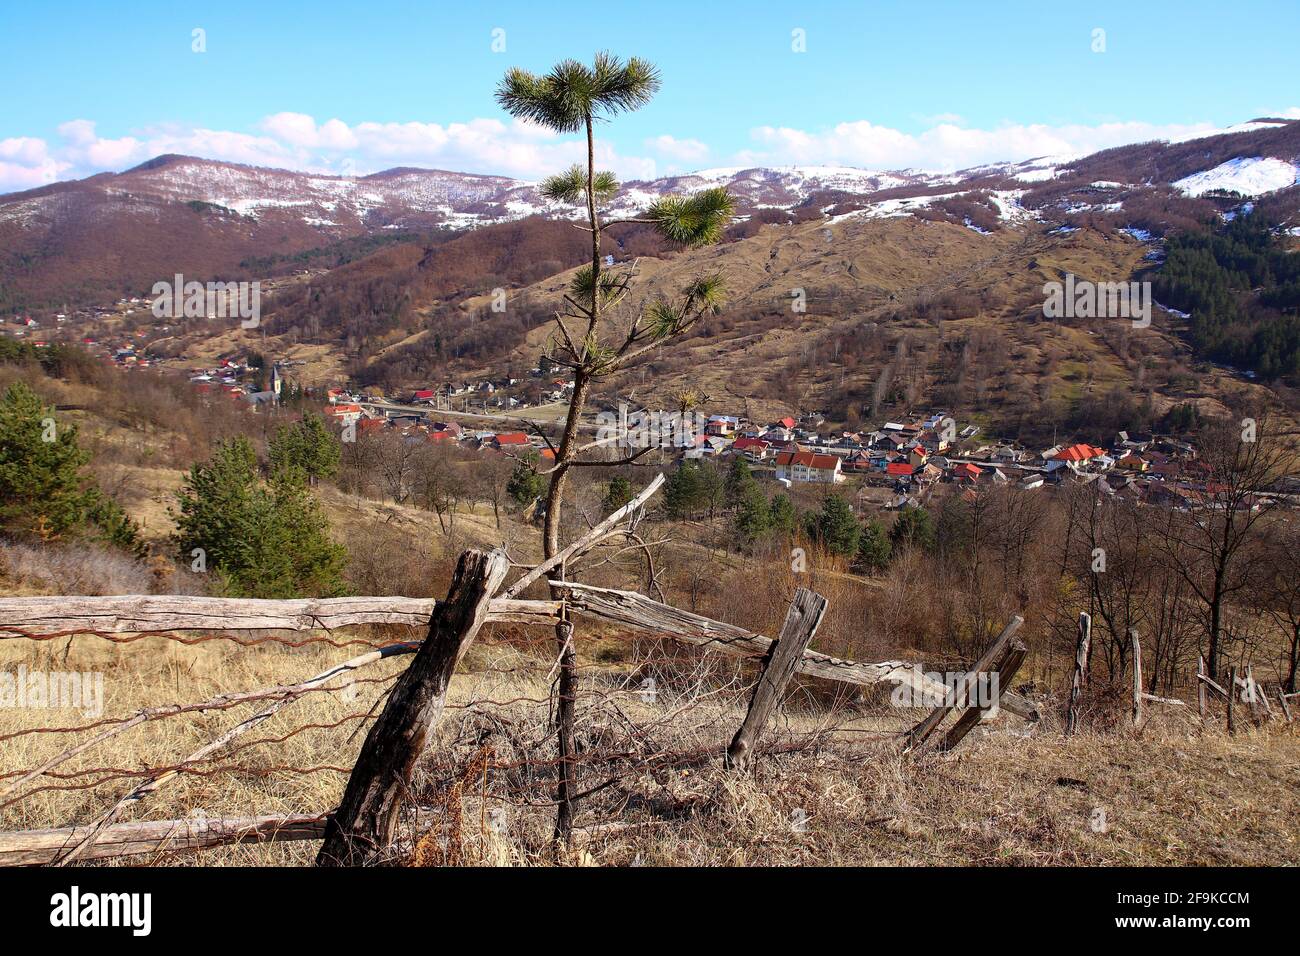 Panorama view of Ciresoaia village in Romania Stock Photo